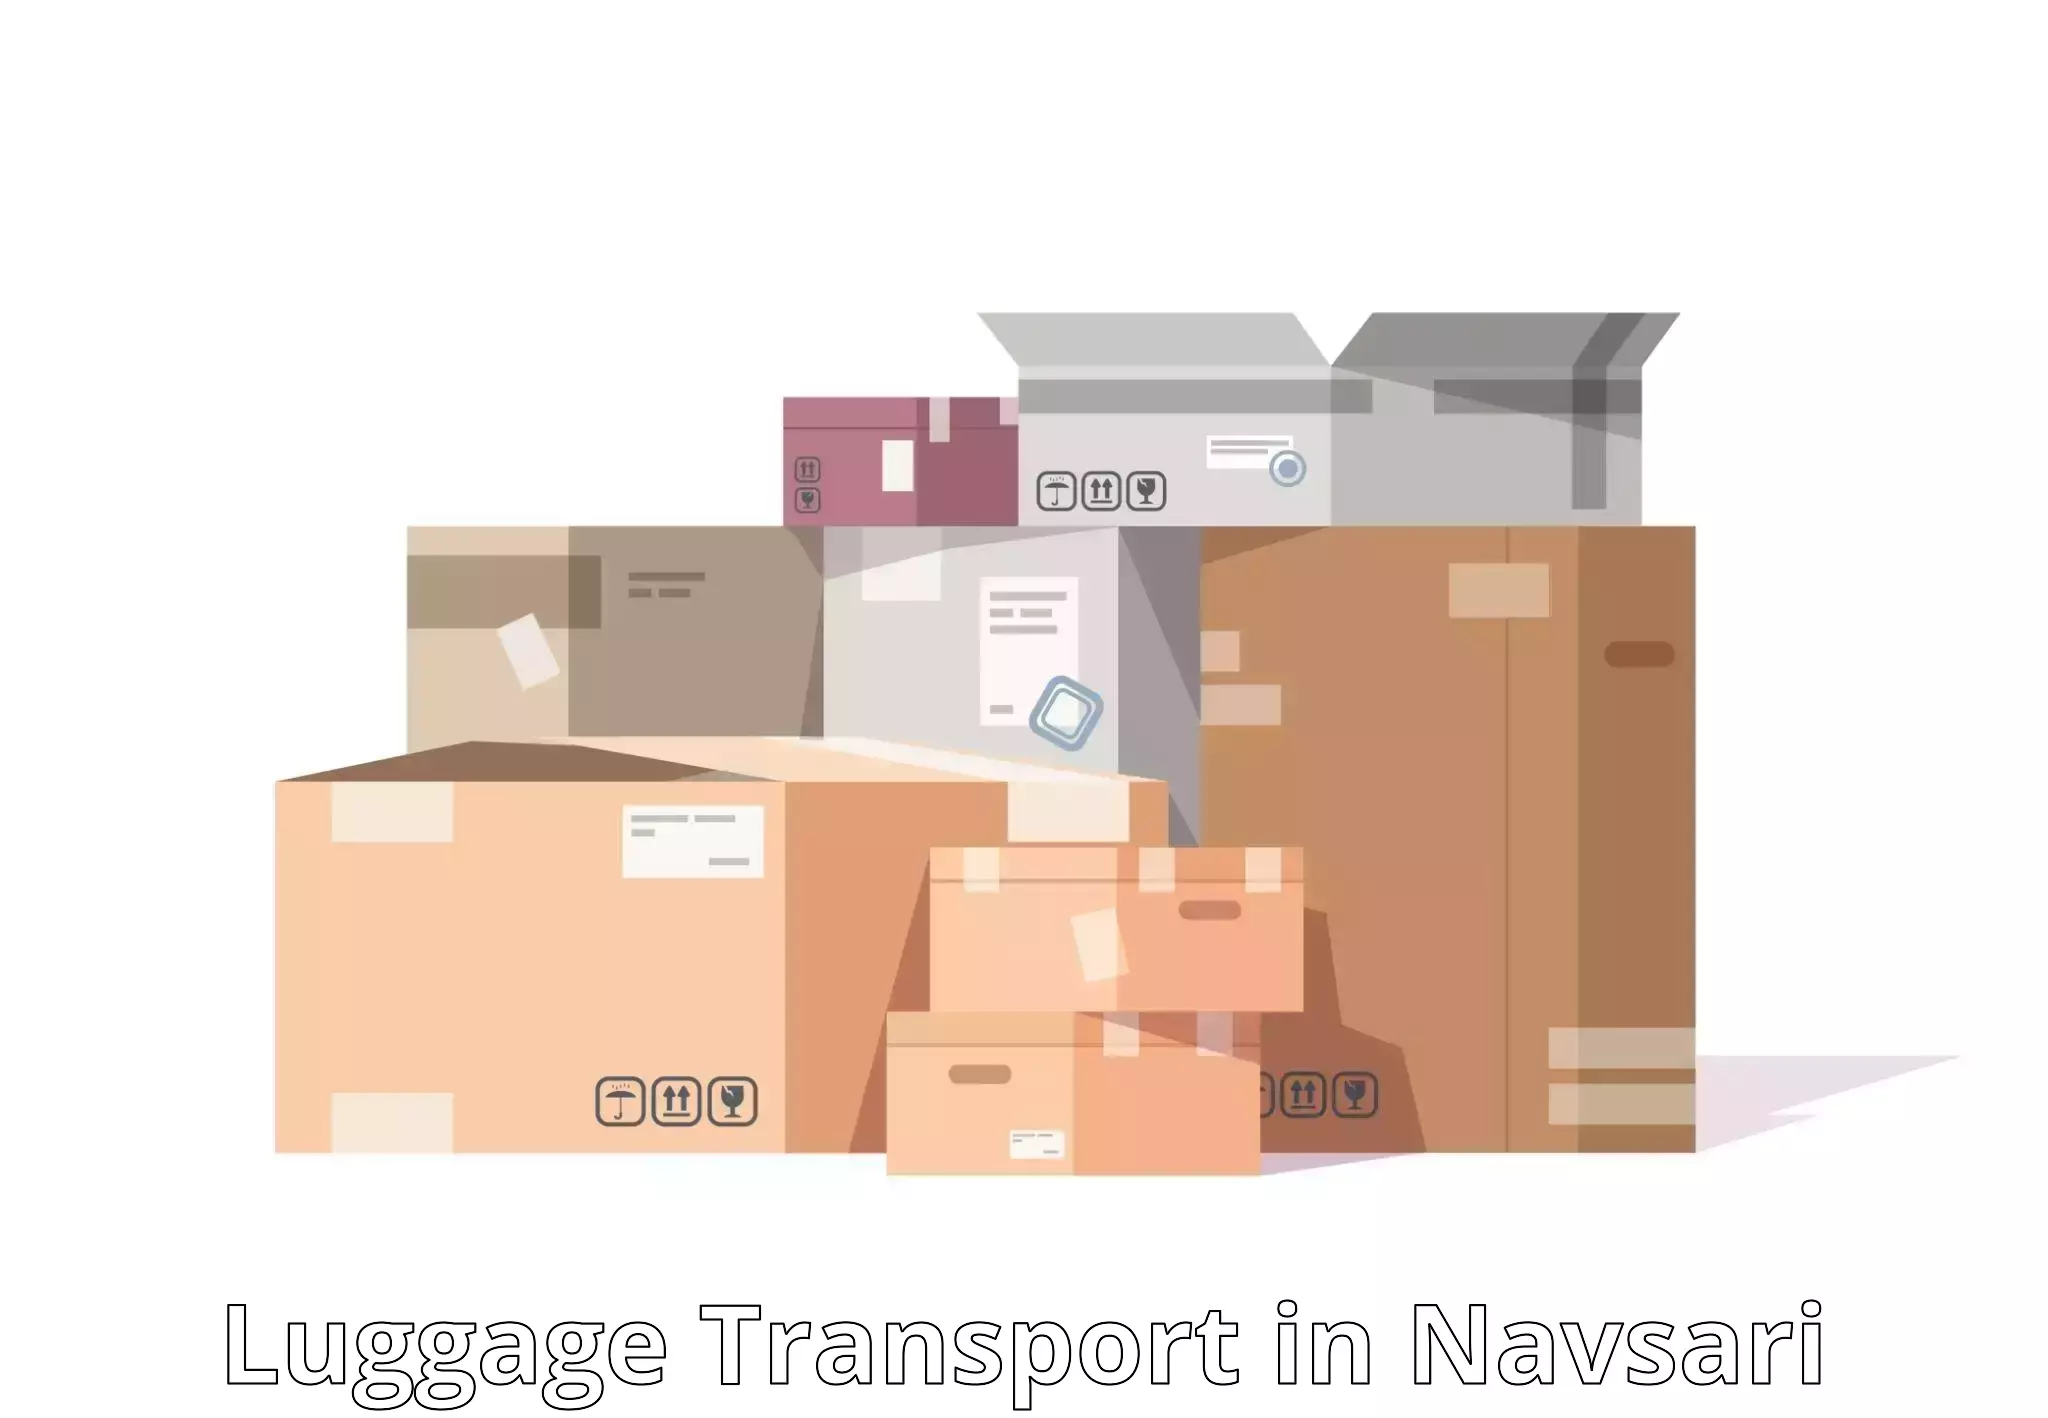 Multi-destination luggage transport in Navsari